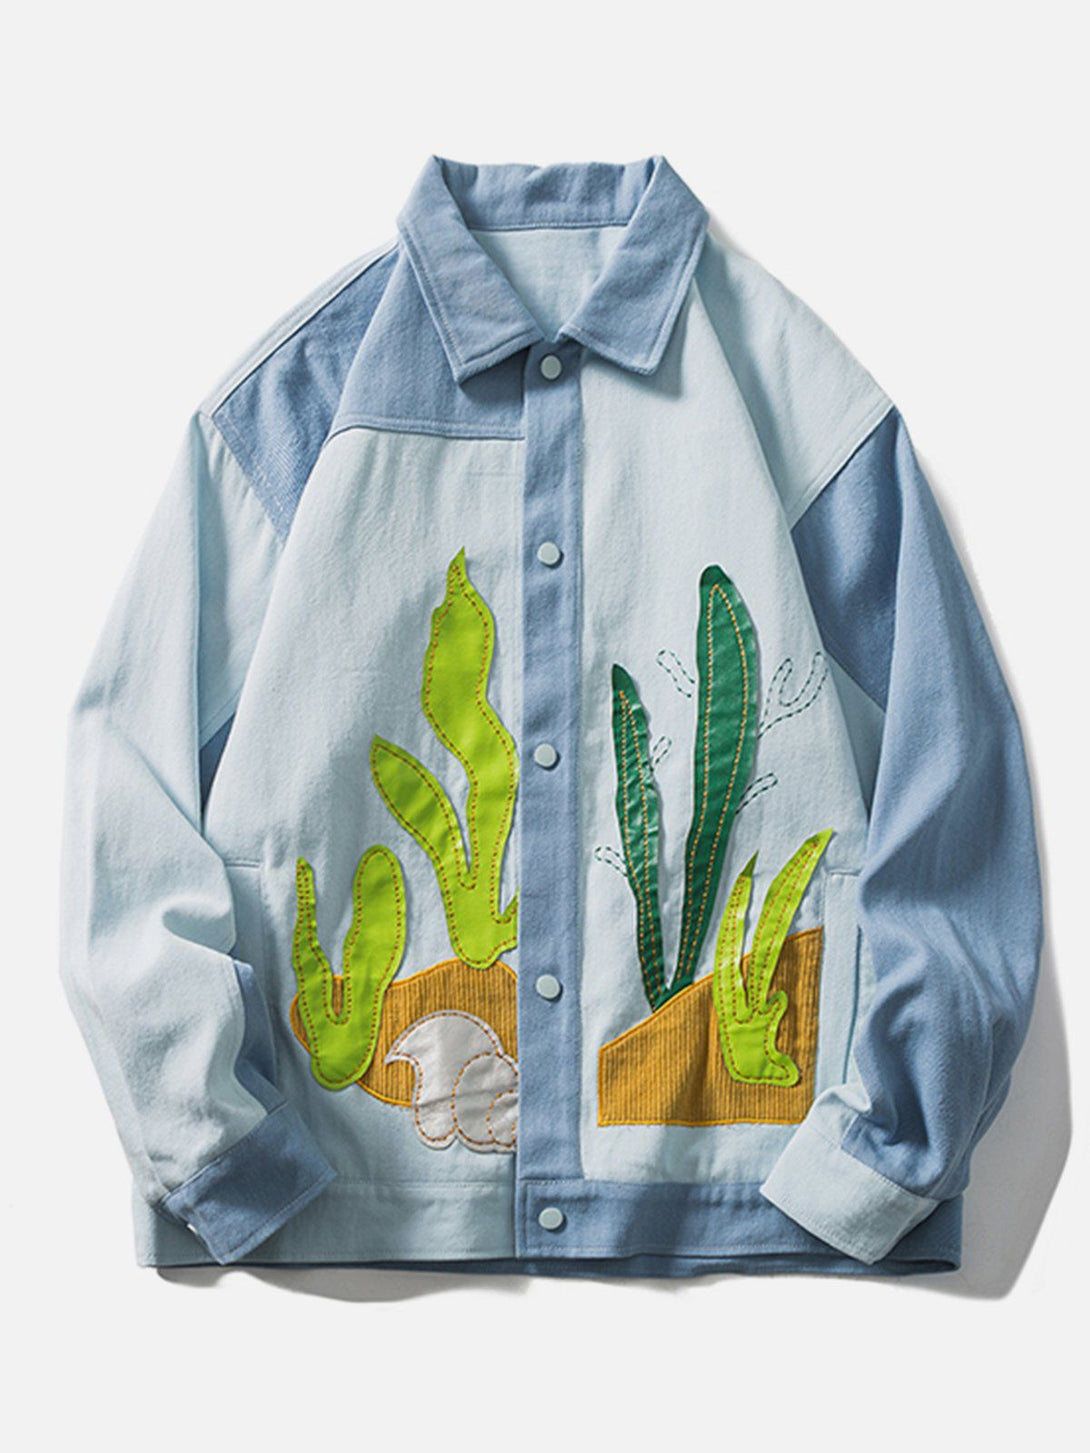 Majesda® - Seagrass Patch Retro Patchwork Jacket outfit ideas, streetwear fashion - majesda.com